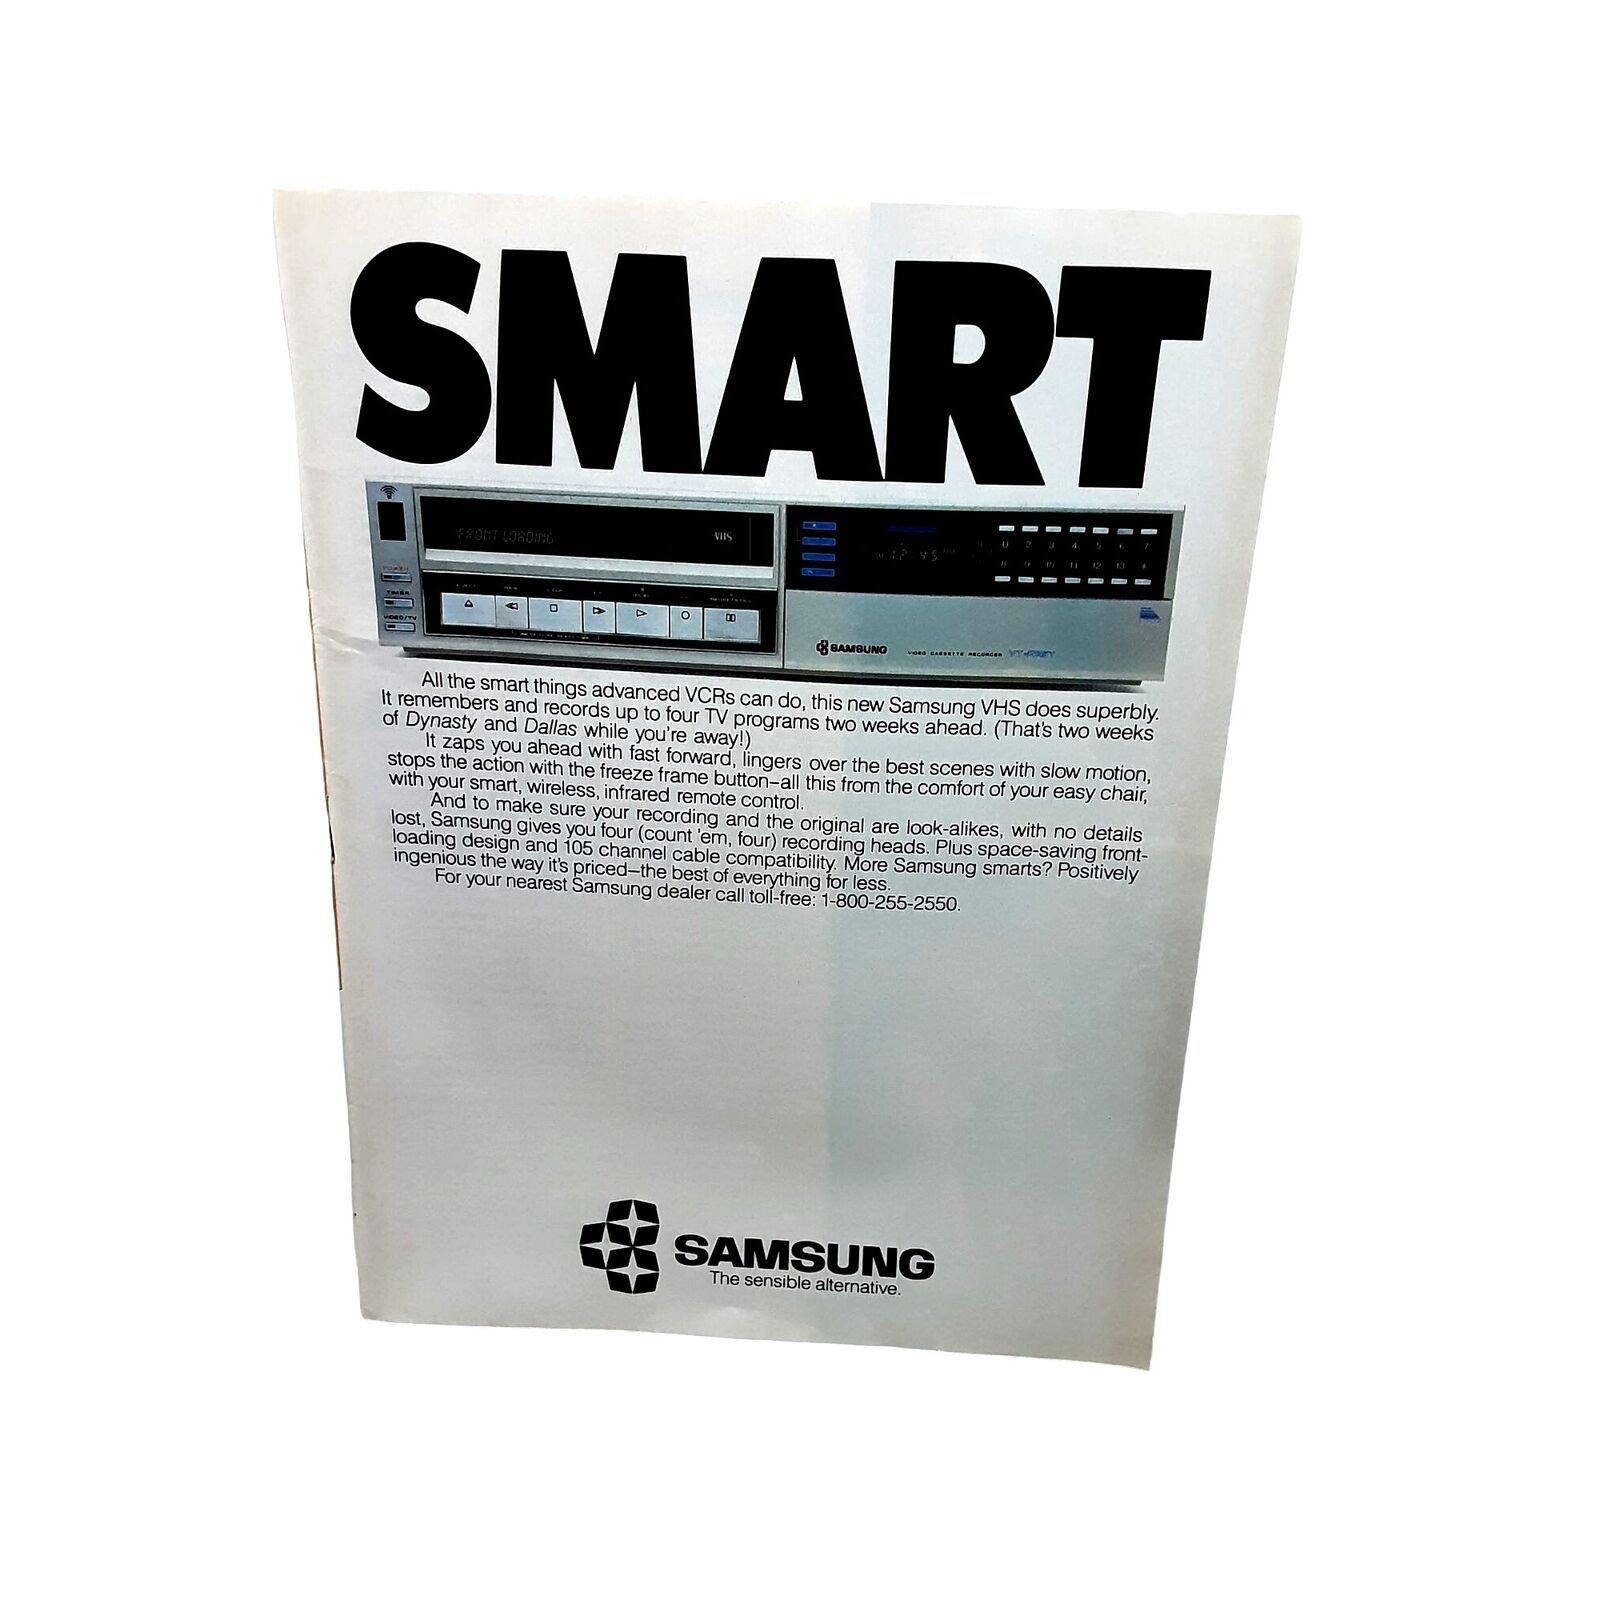 1985 Samsung VHS VCR Smart Print Ad